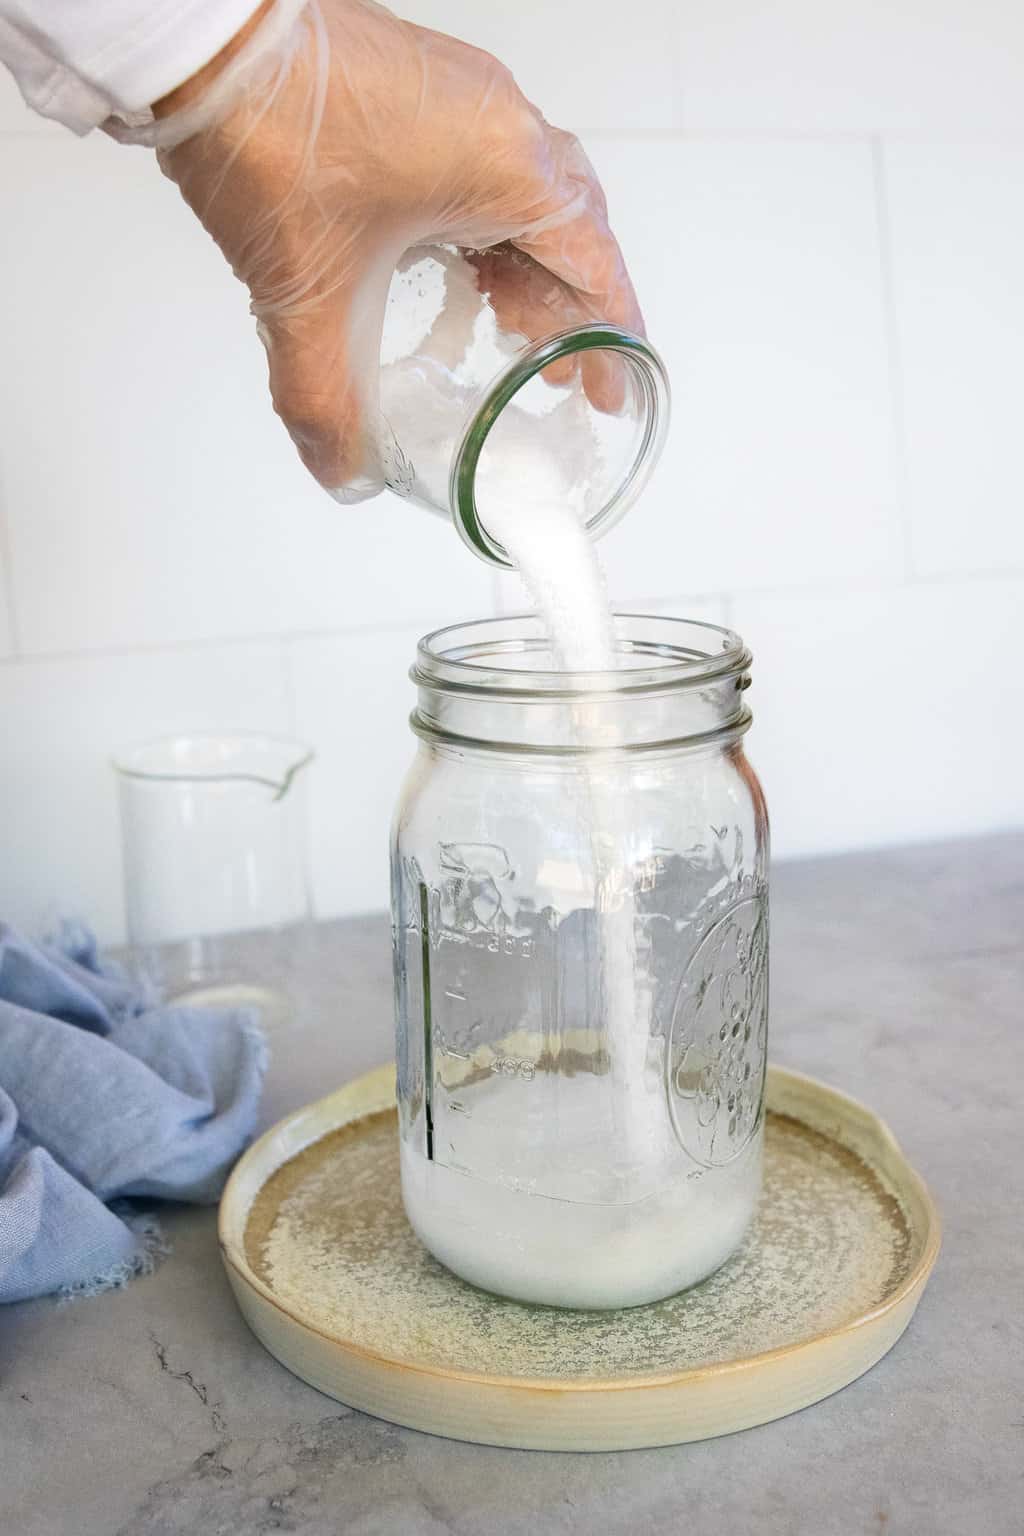 Make lye water for homemade glycerin soap recipe